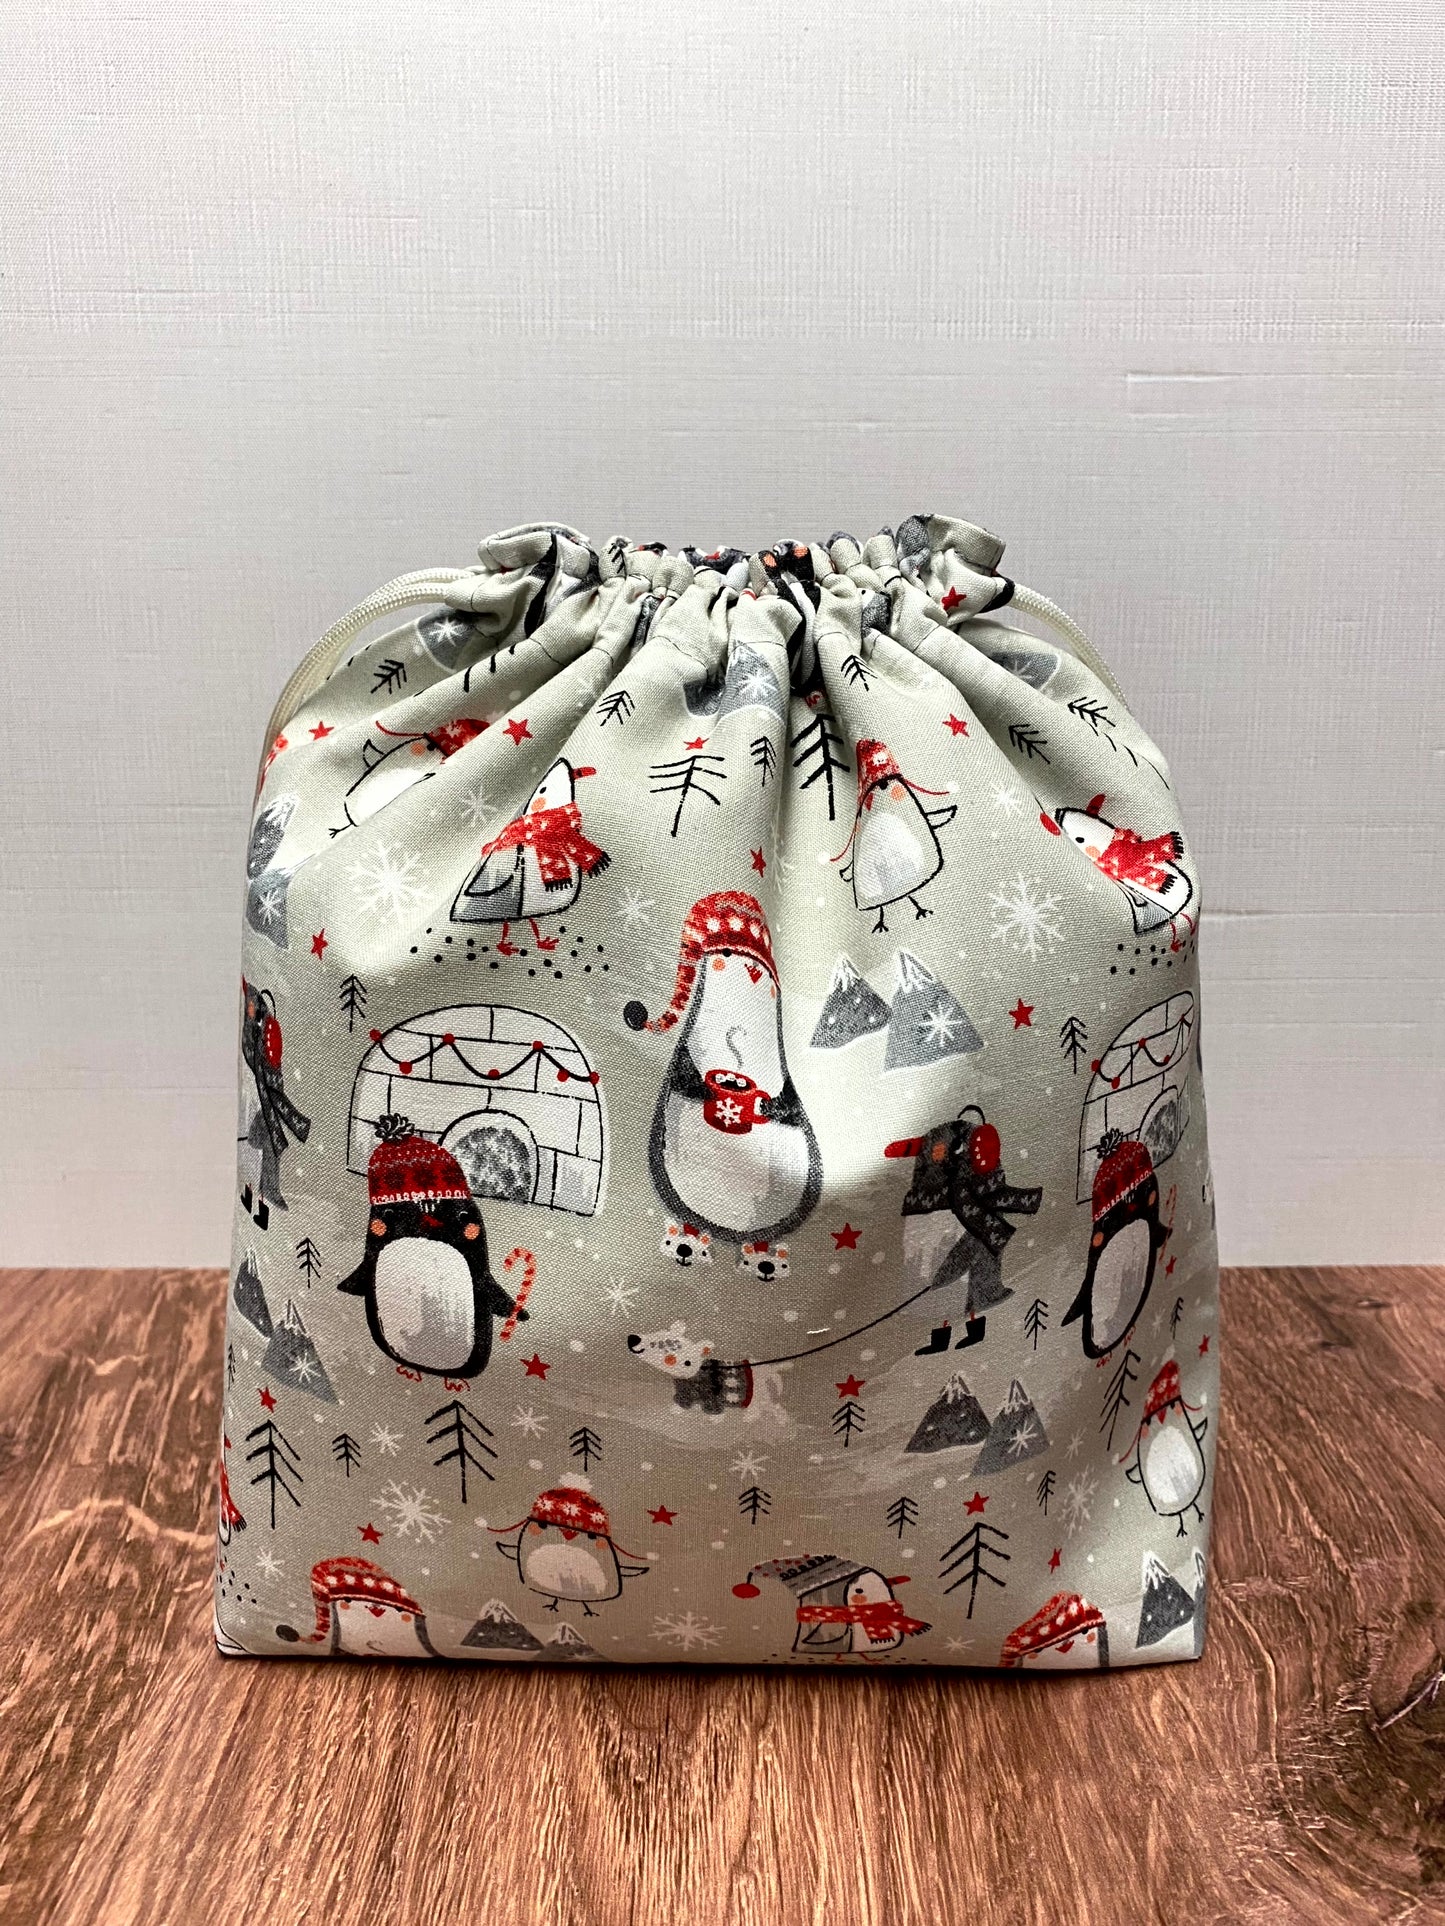 Penguin Project Bag - Drawstring Bag – Knitting Bag – Crochet Bag - Toy Sack - Bingo Bag – Cross Stitch Bag - Birds - Winter - Gray